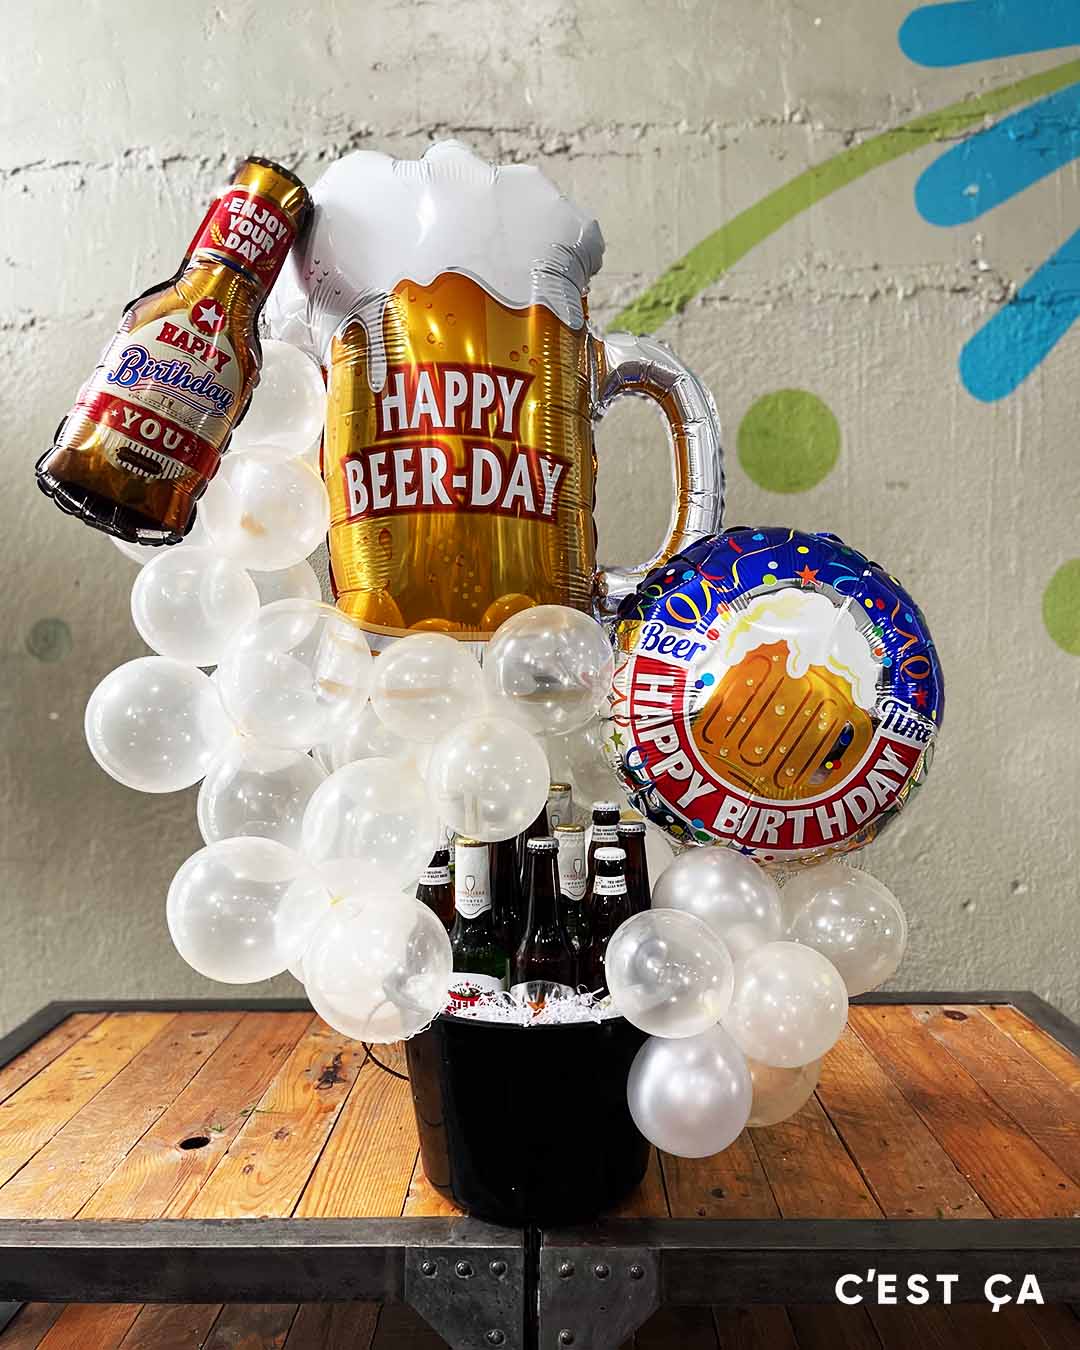 Happy Beer-Day!